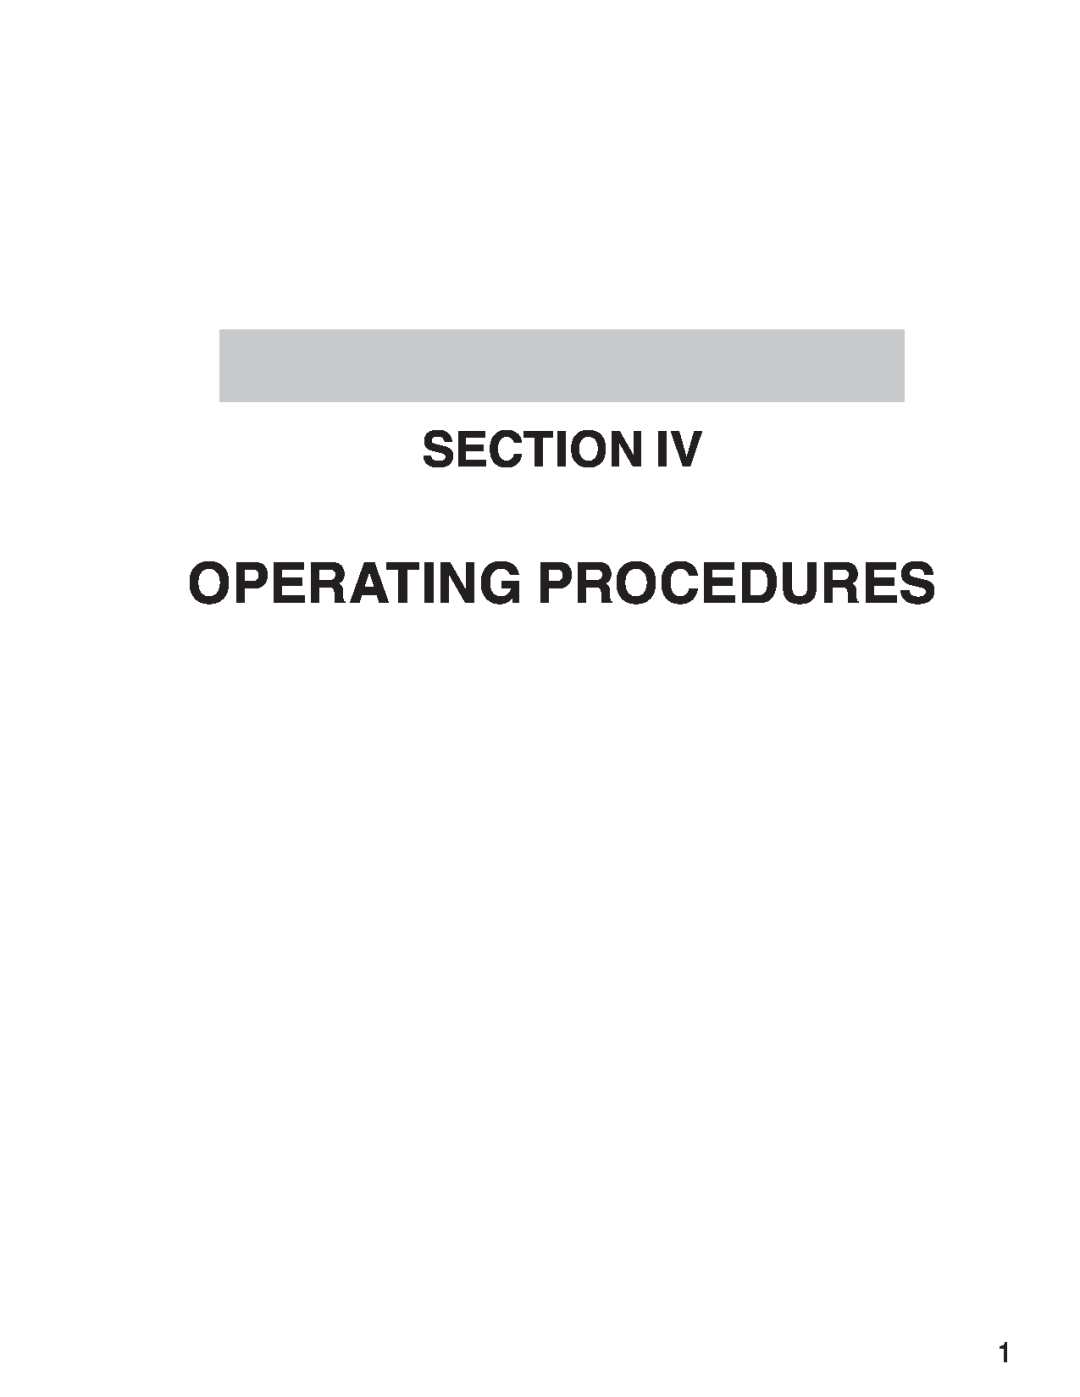 ATN 3 manual Operating Procedures, Section 